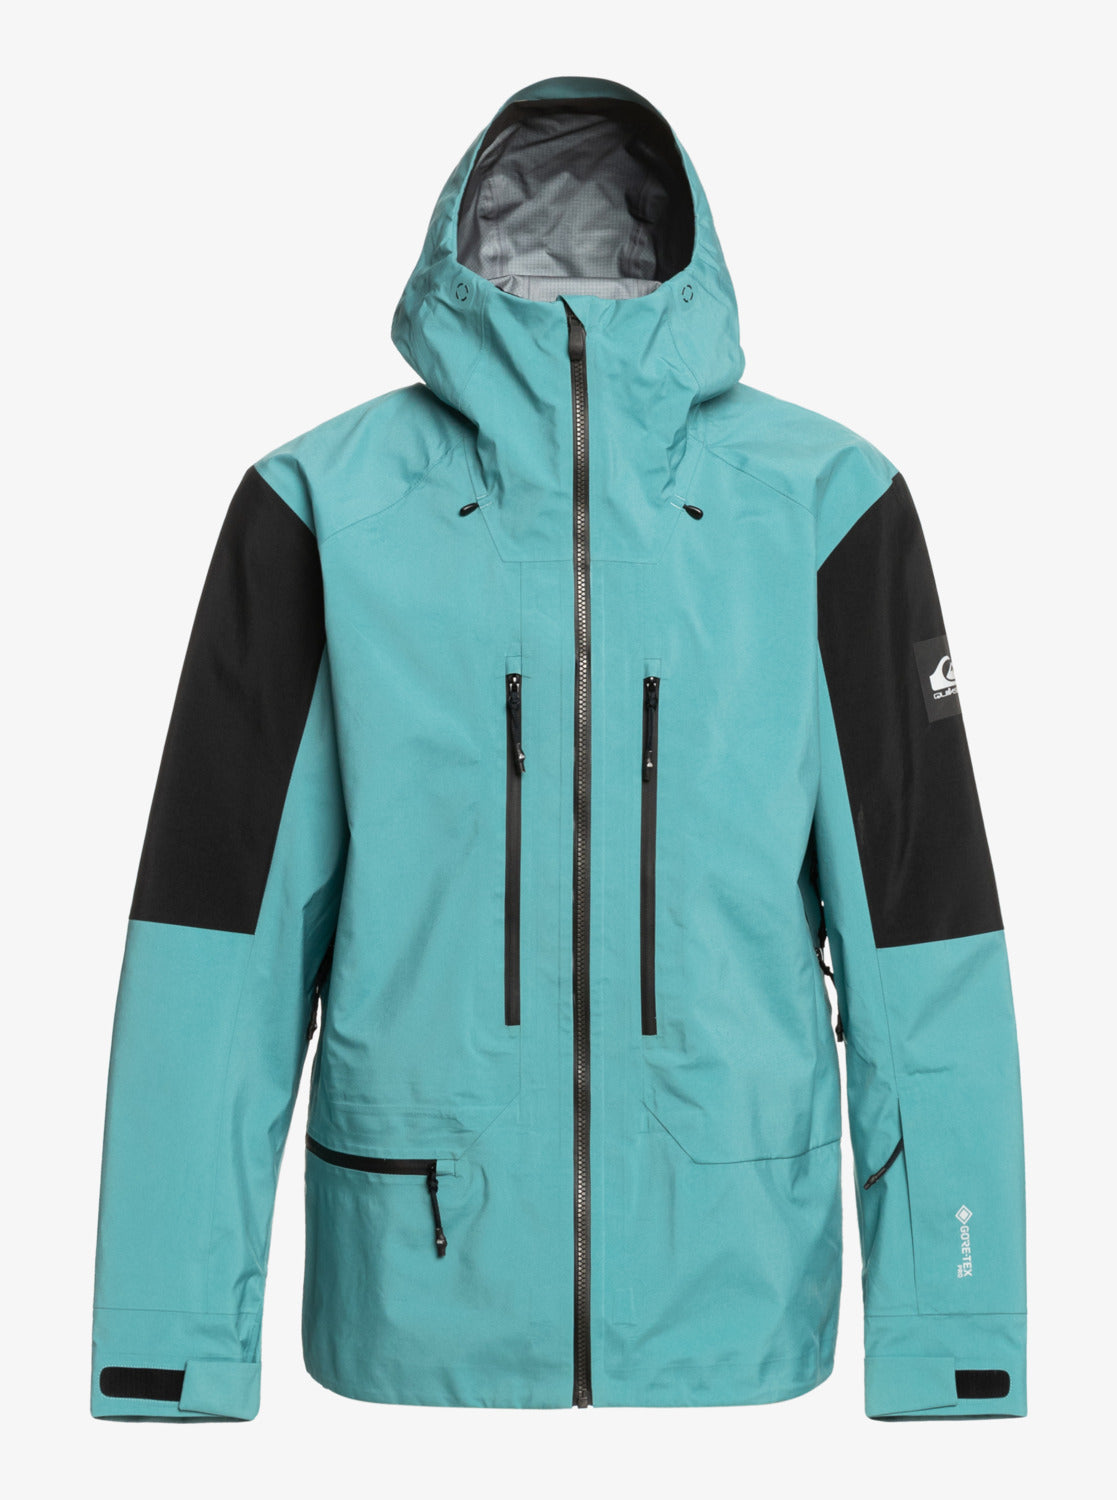 Highline Pro Travis Rice 3L Gore-Tex® Technical Snow Jacket 